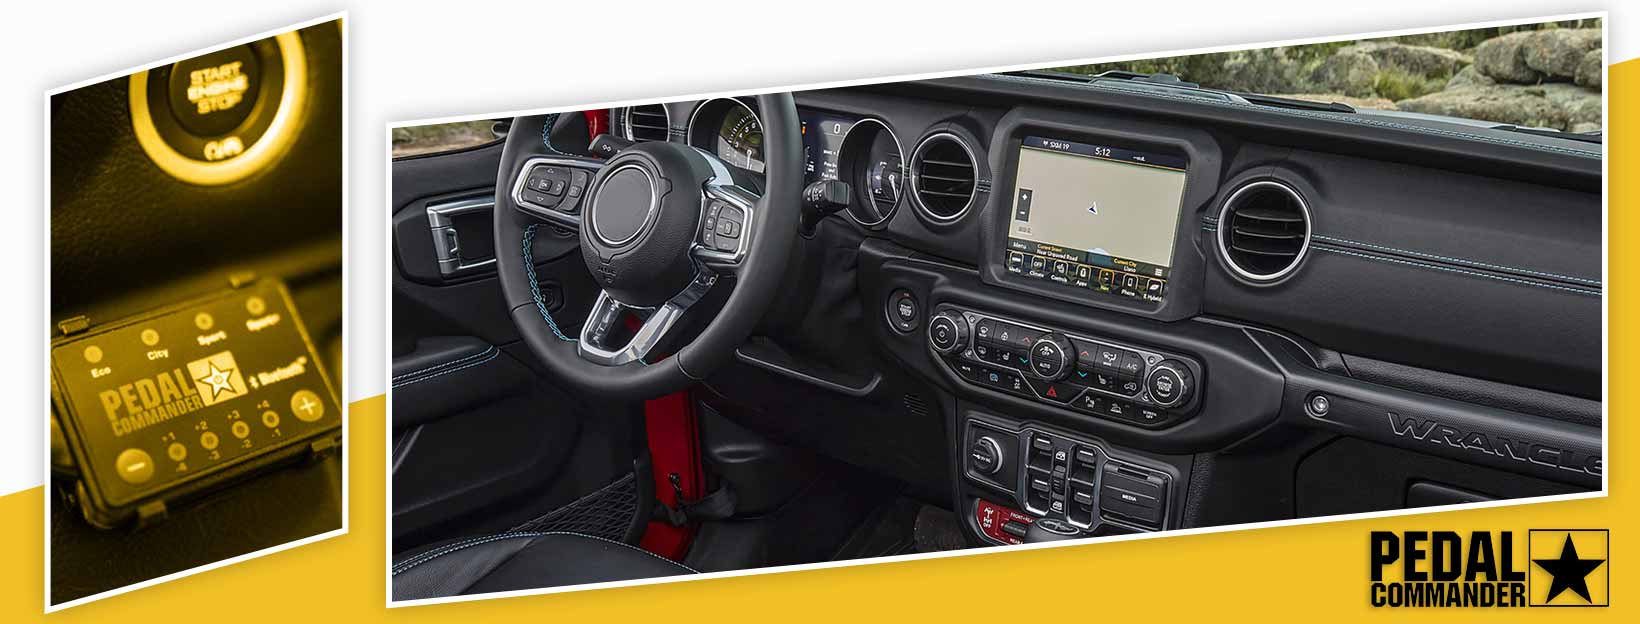 Pedal Commander for Jeep Wrangler - interior